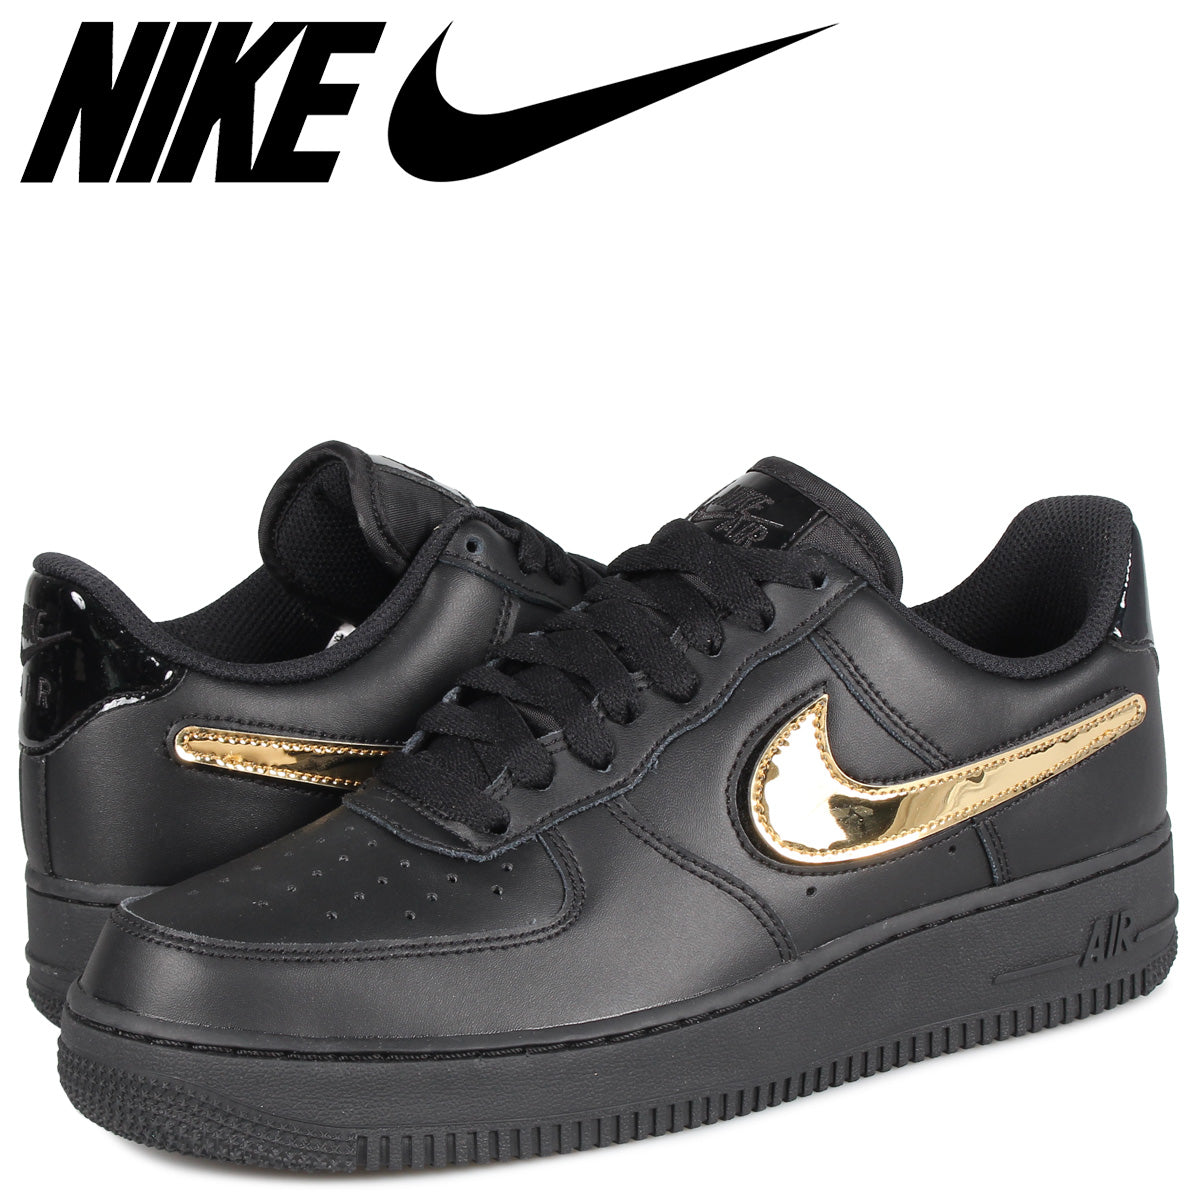 Nike Air Force 1 '07 LV8 3 Black/Gold - CT2252-001